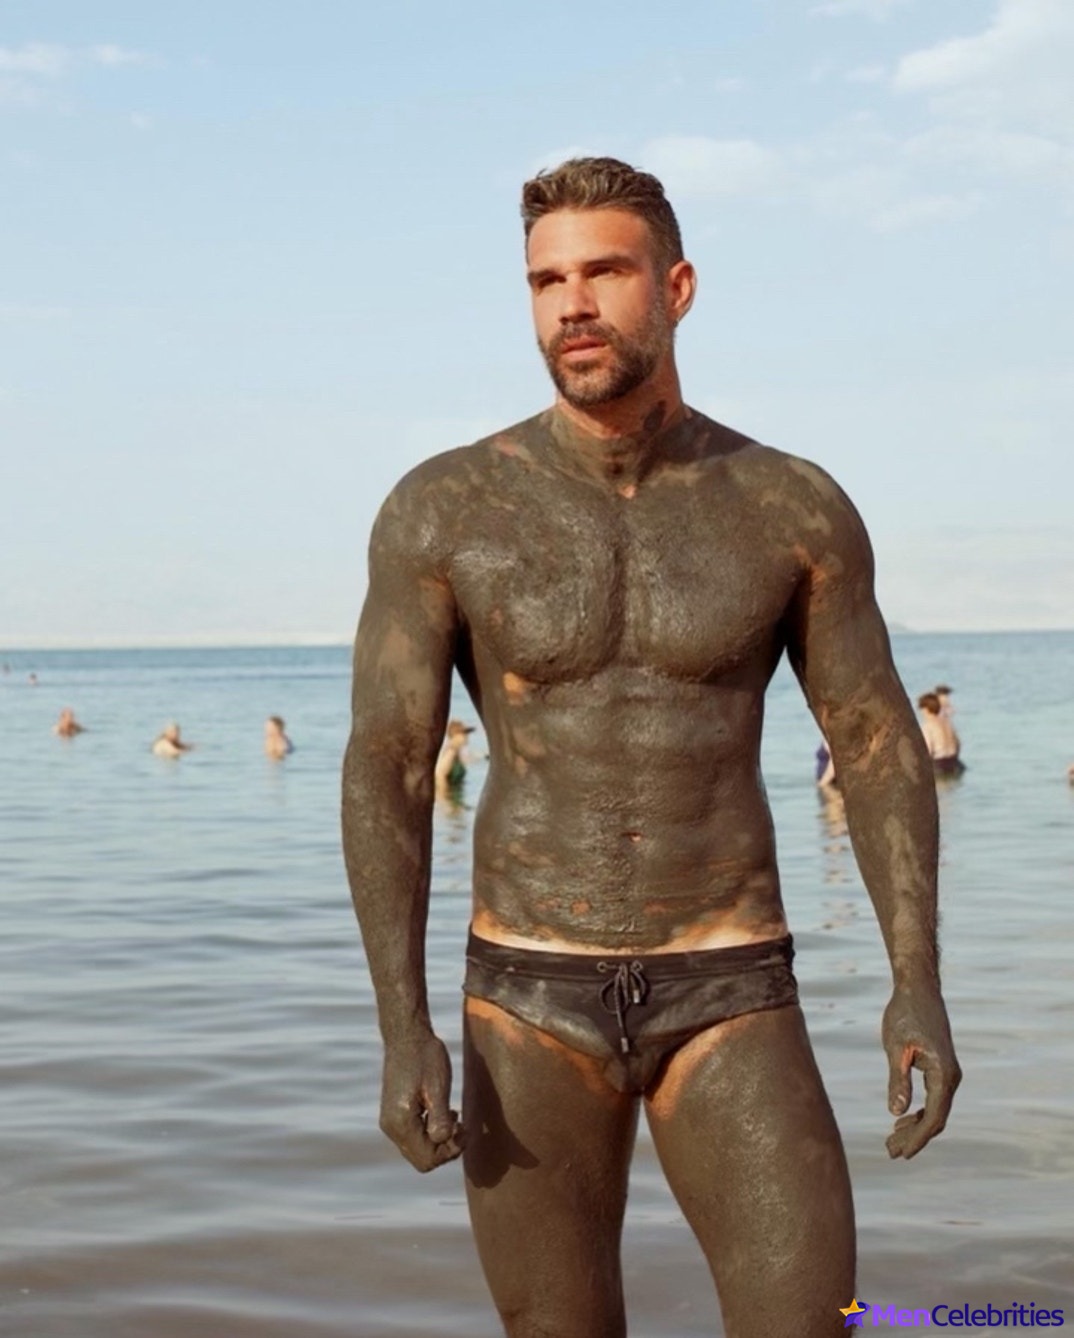 Christian Bendek makes a splash in The Hamptons